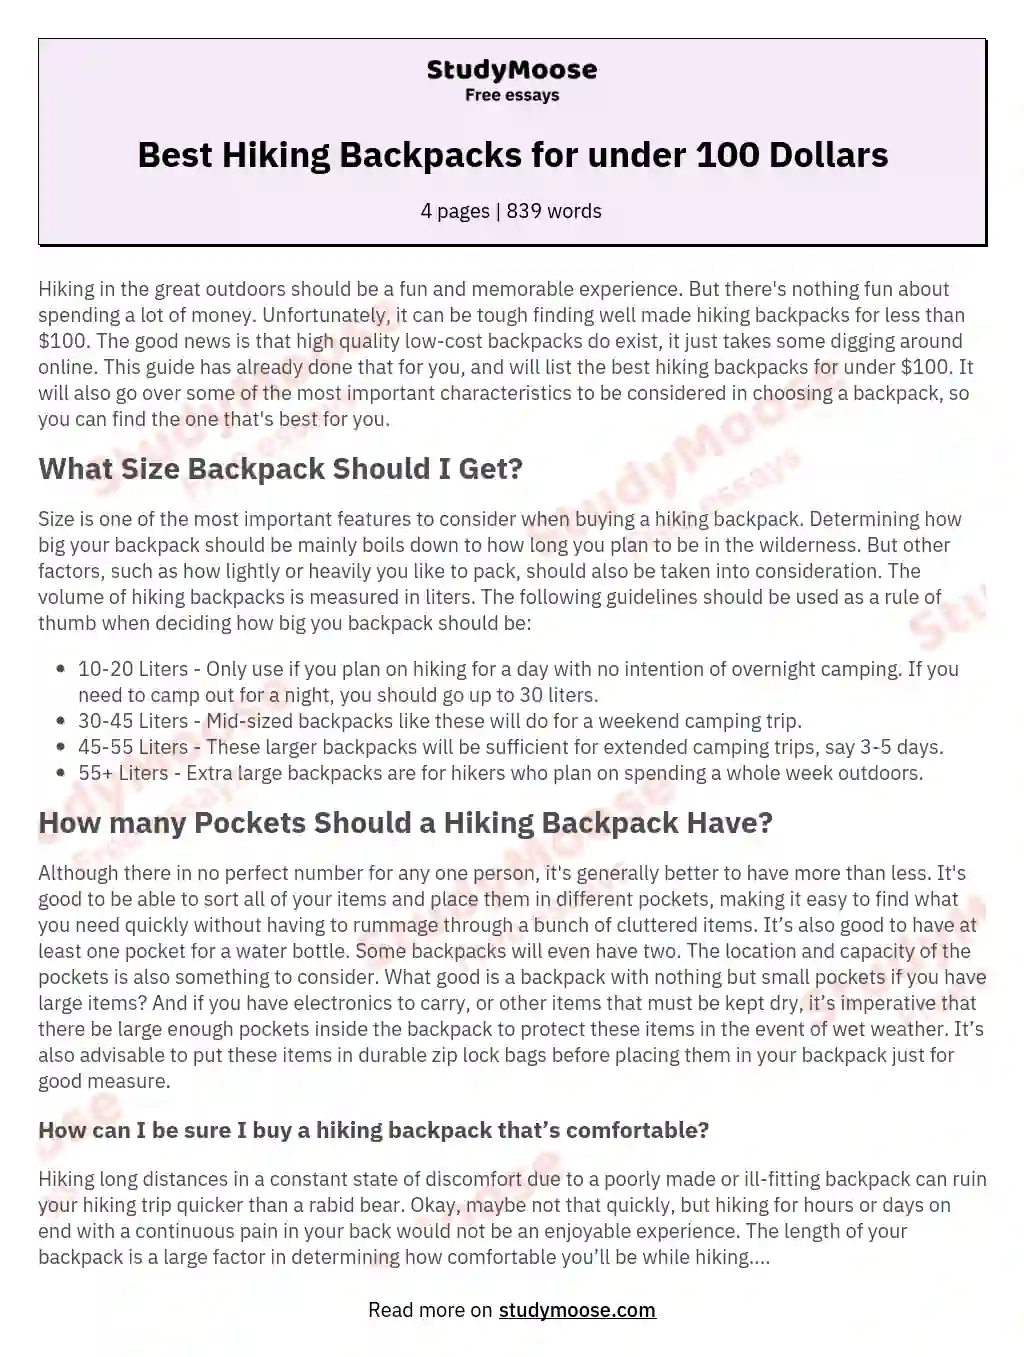 Best Hiking Backpacks for under 100 Dollars essay